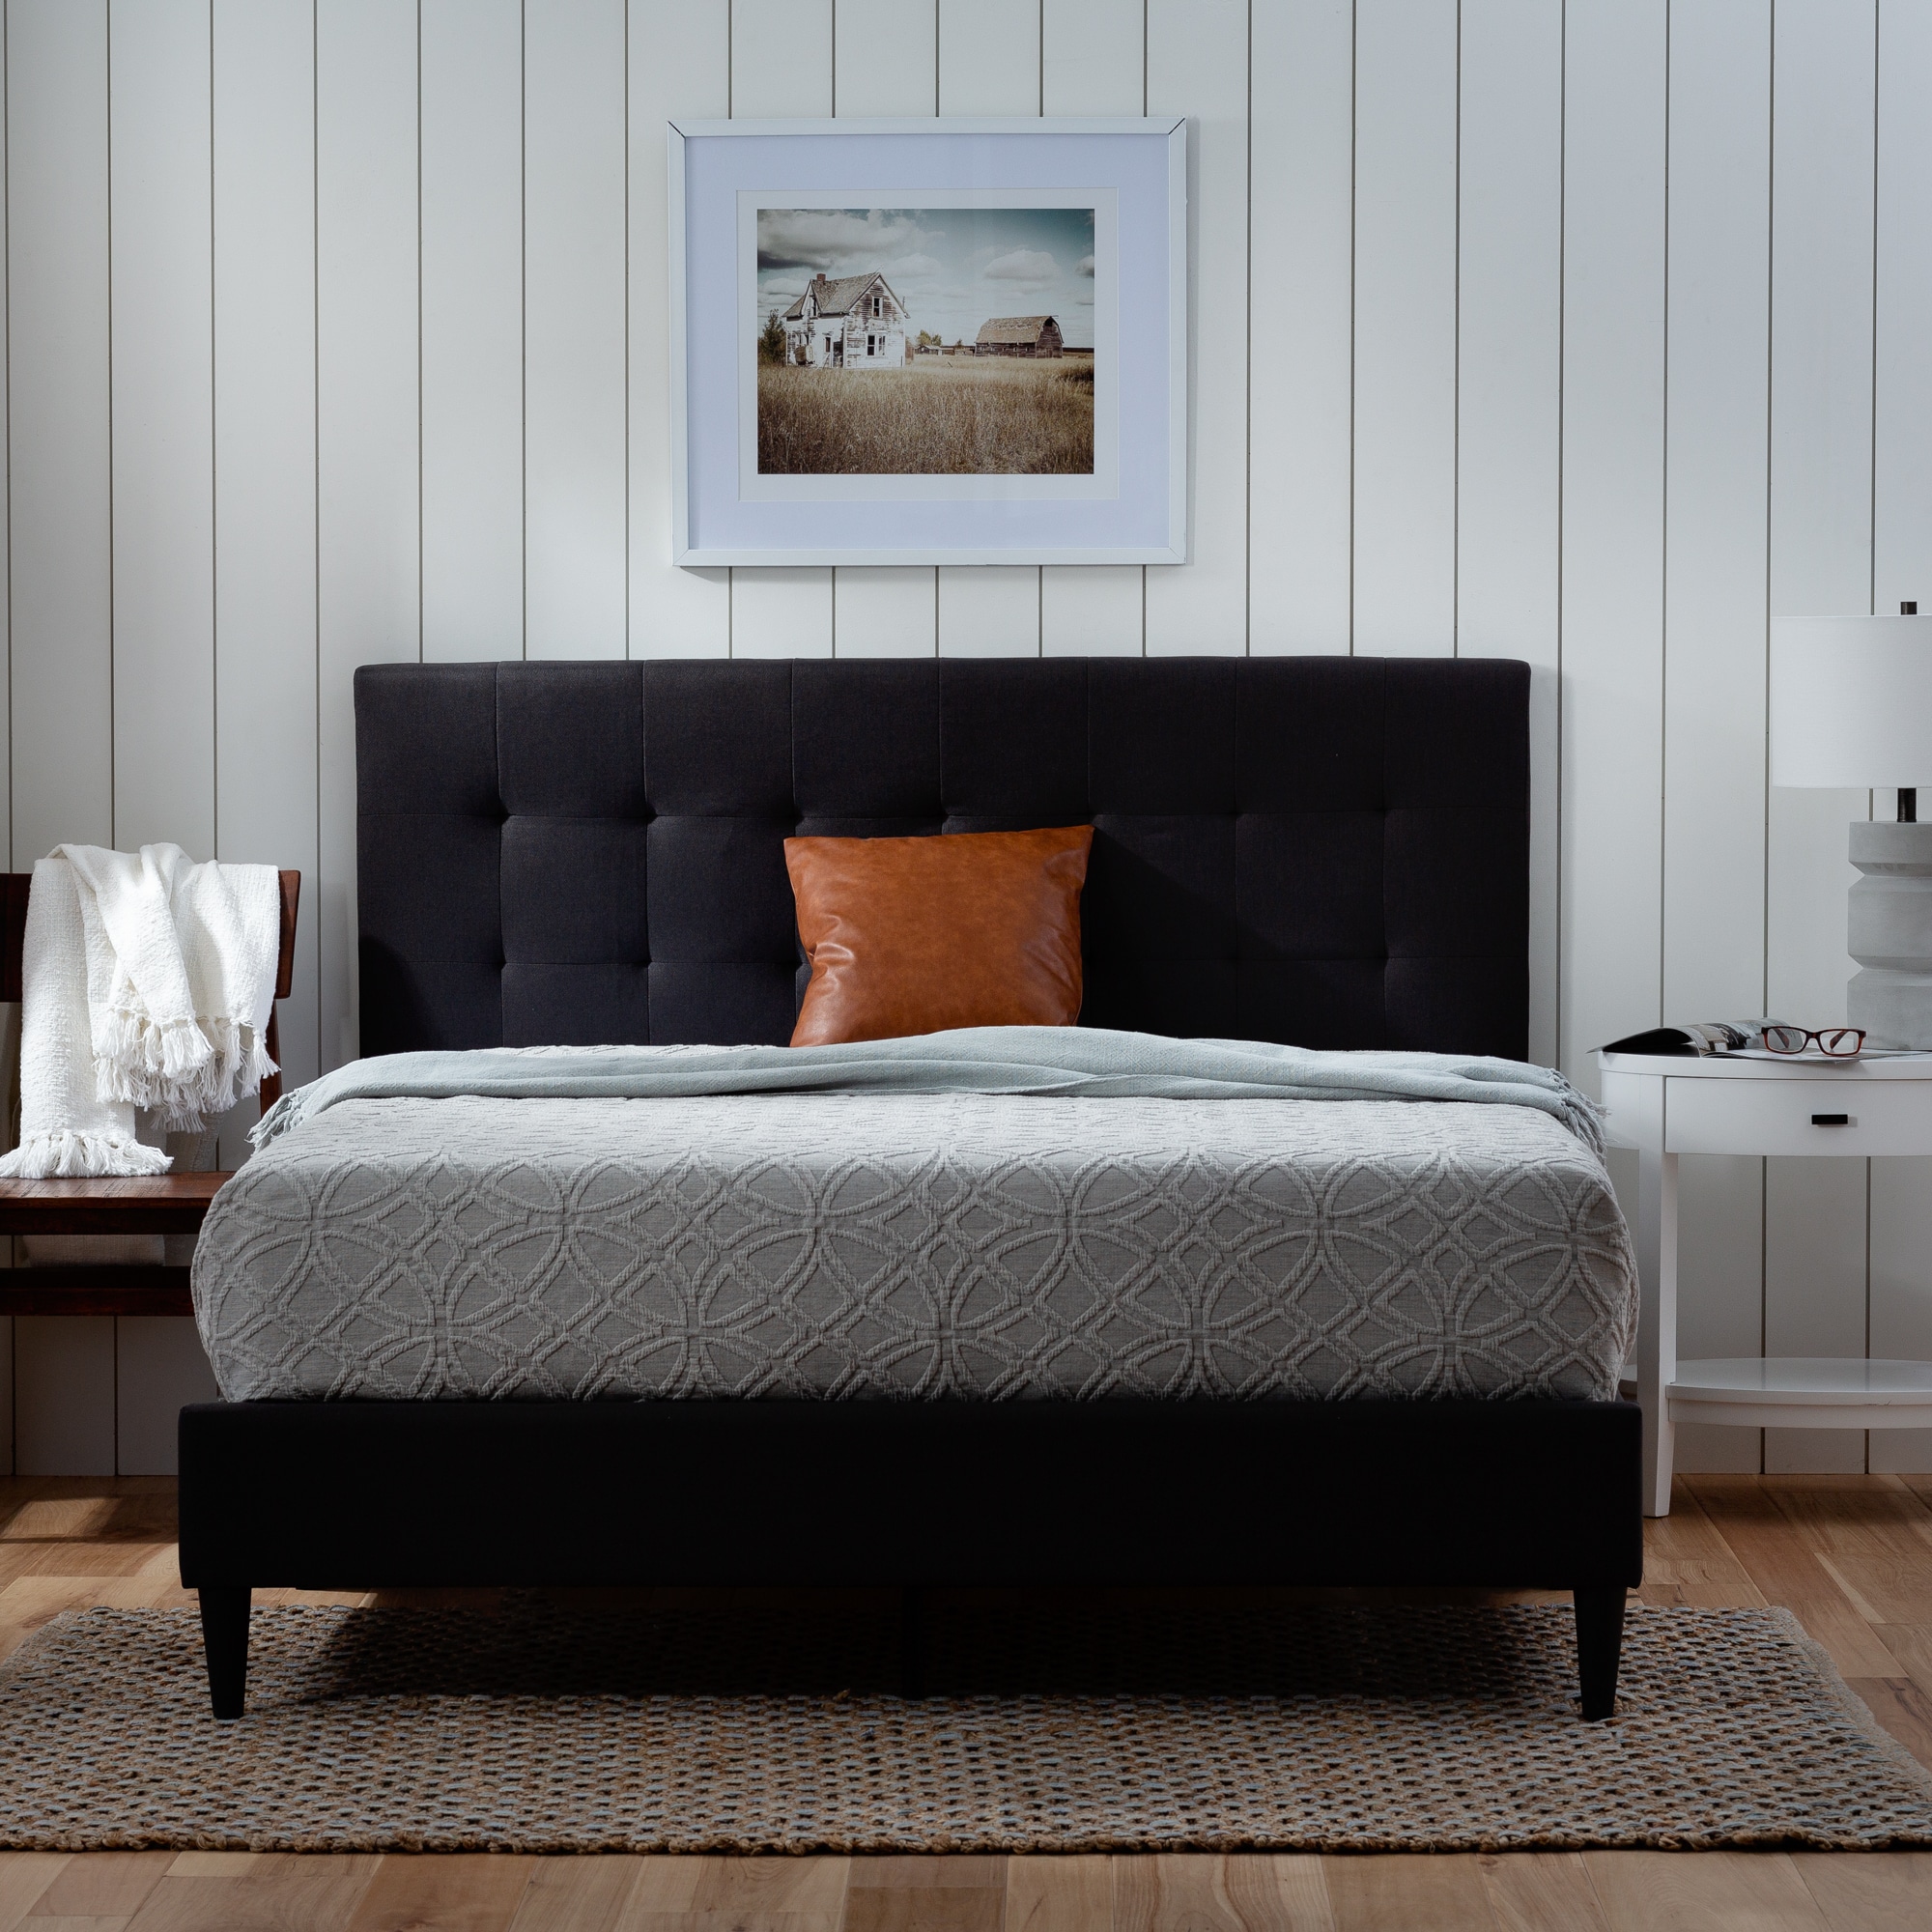 Black Upholstered Queen Size Platform Bed Frame with Headboard Panel Bed Bedroom 